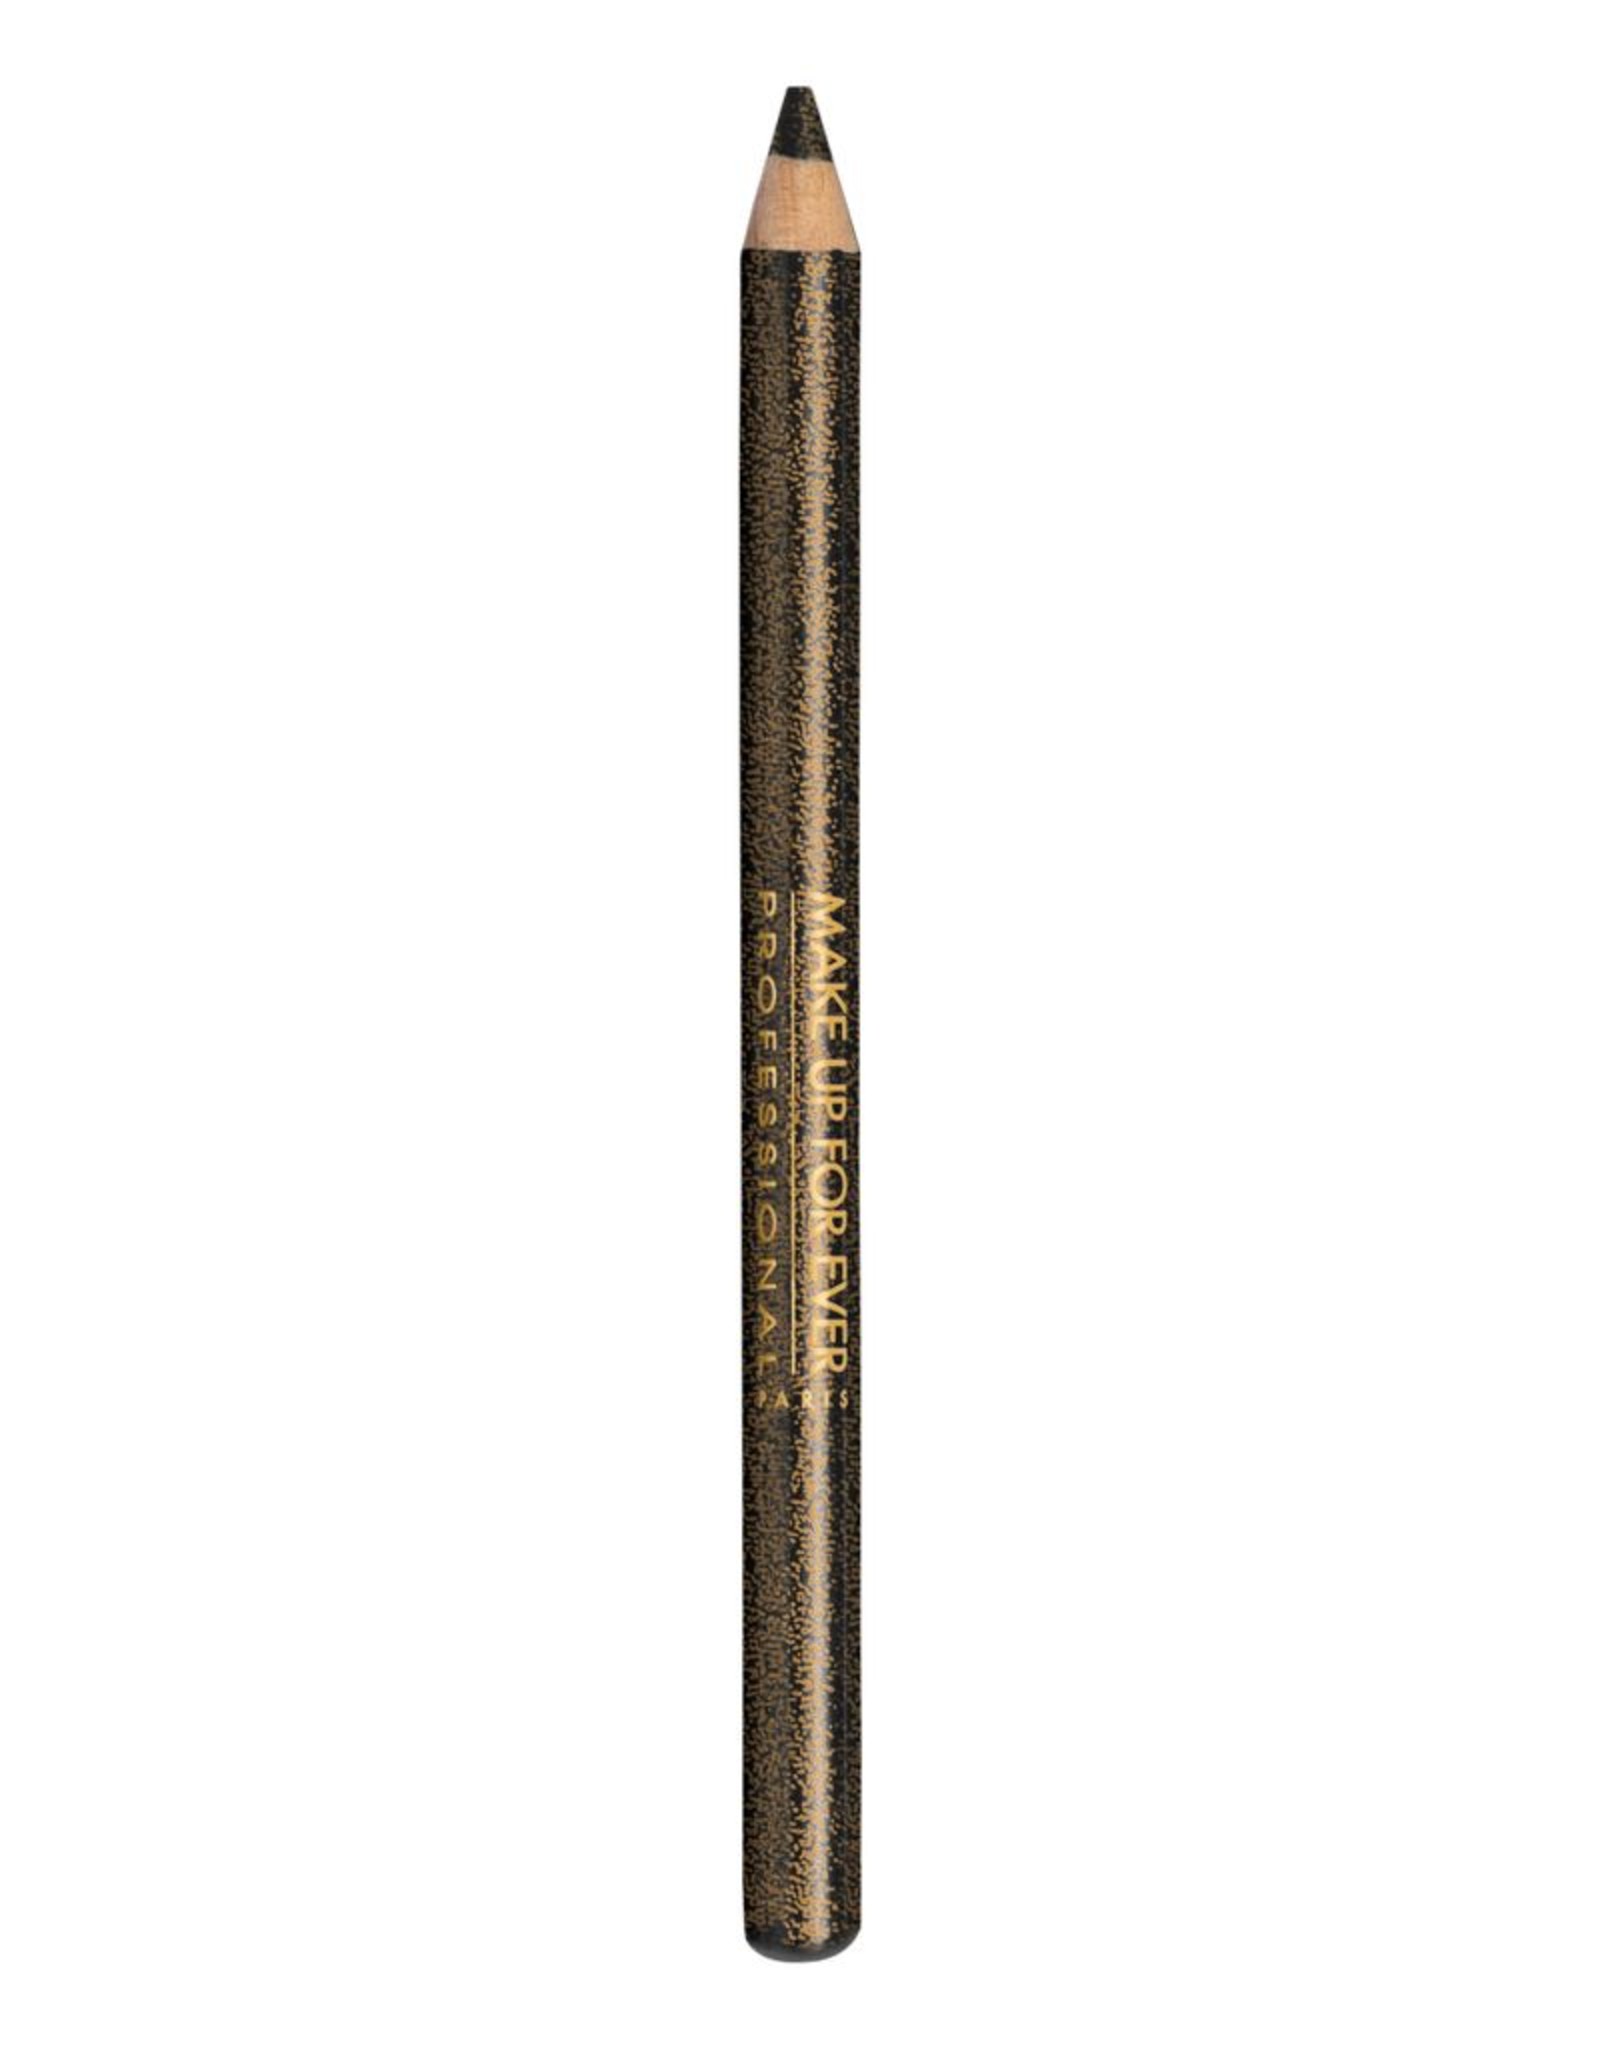 MUFE CRAYON KHOL 1,14g6K - Noir a reflets metal  (MB 354 look gold ic™ne)